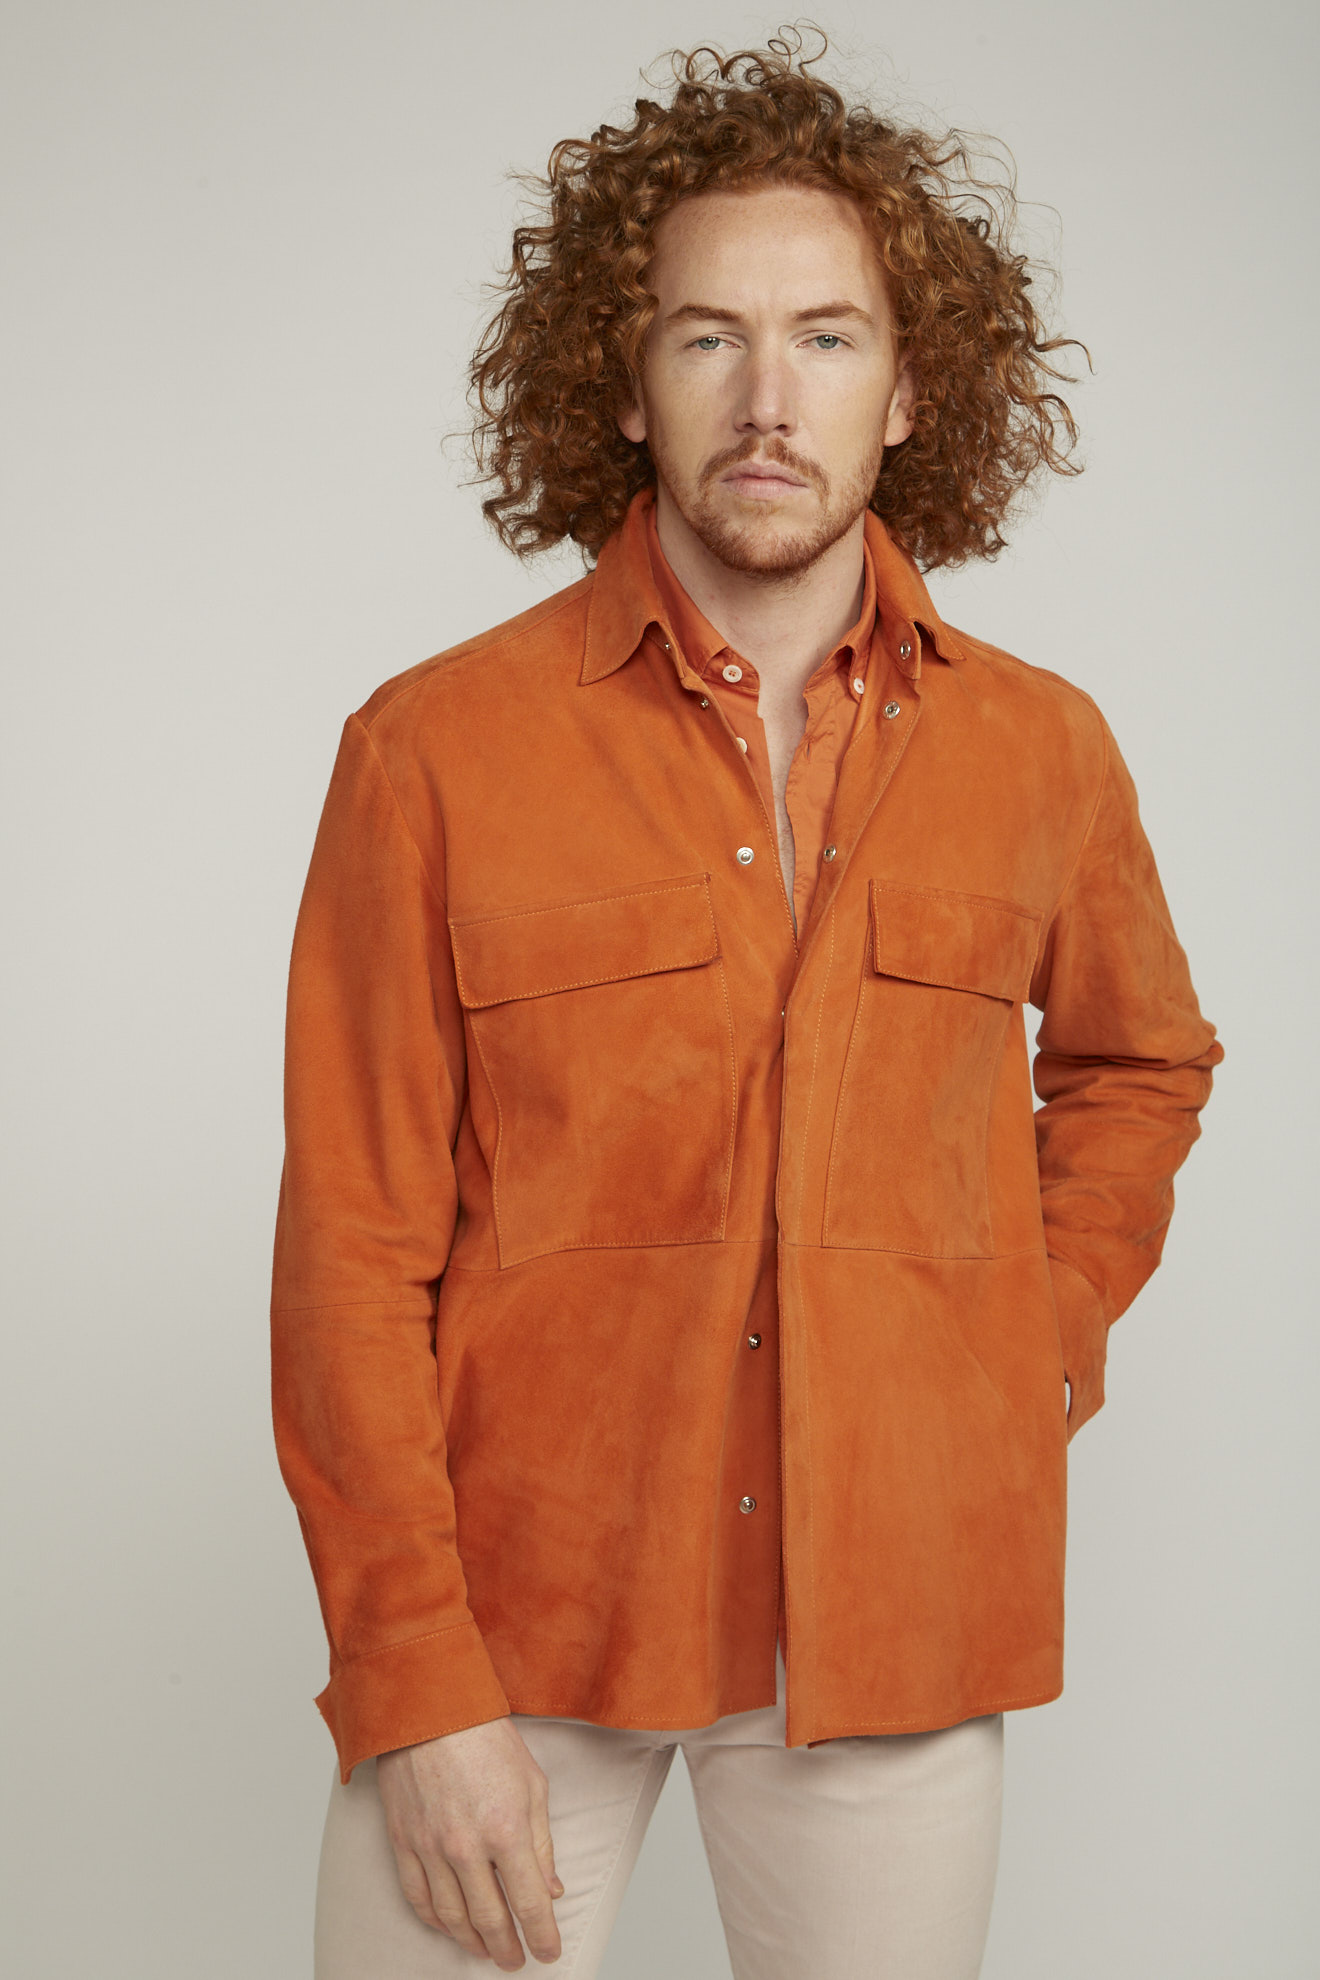 arma shirt orange plain leather model front